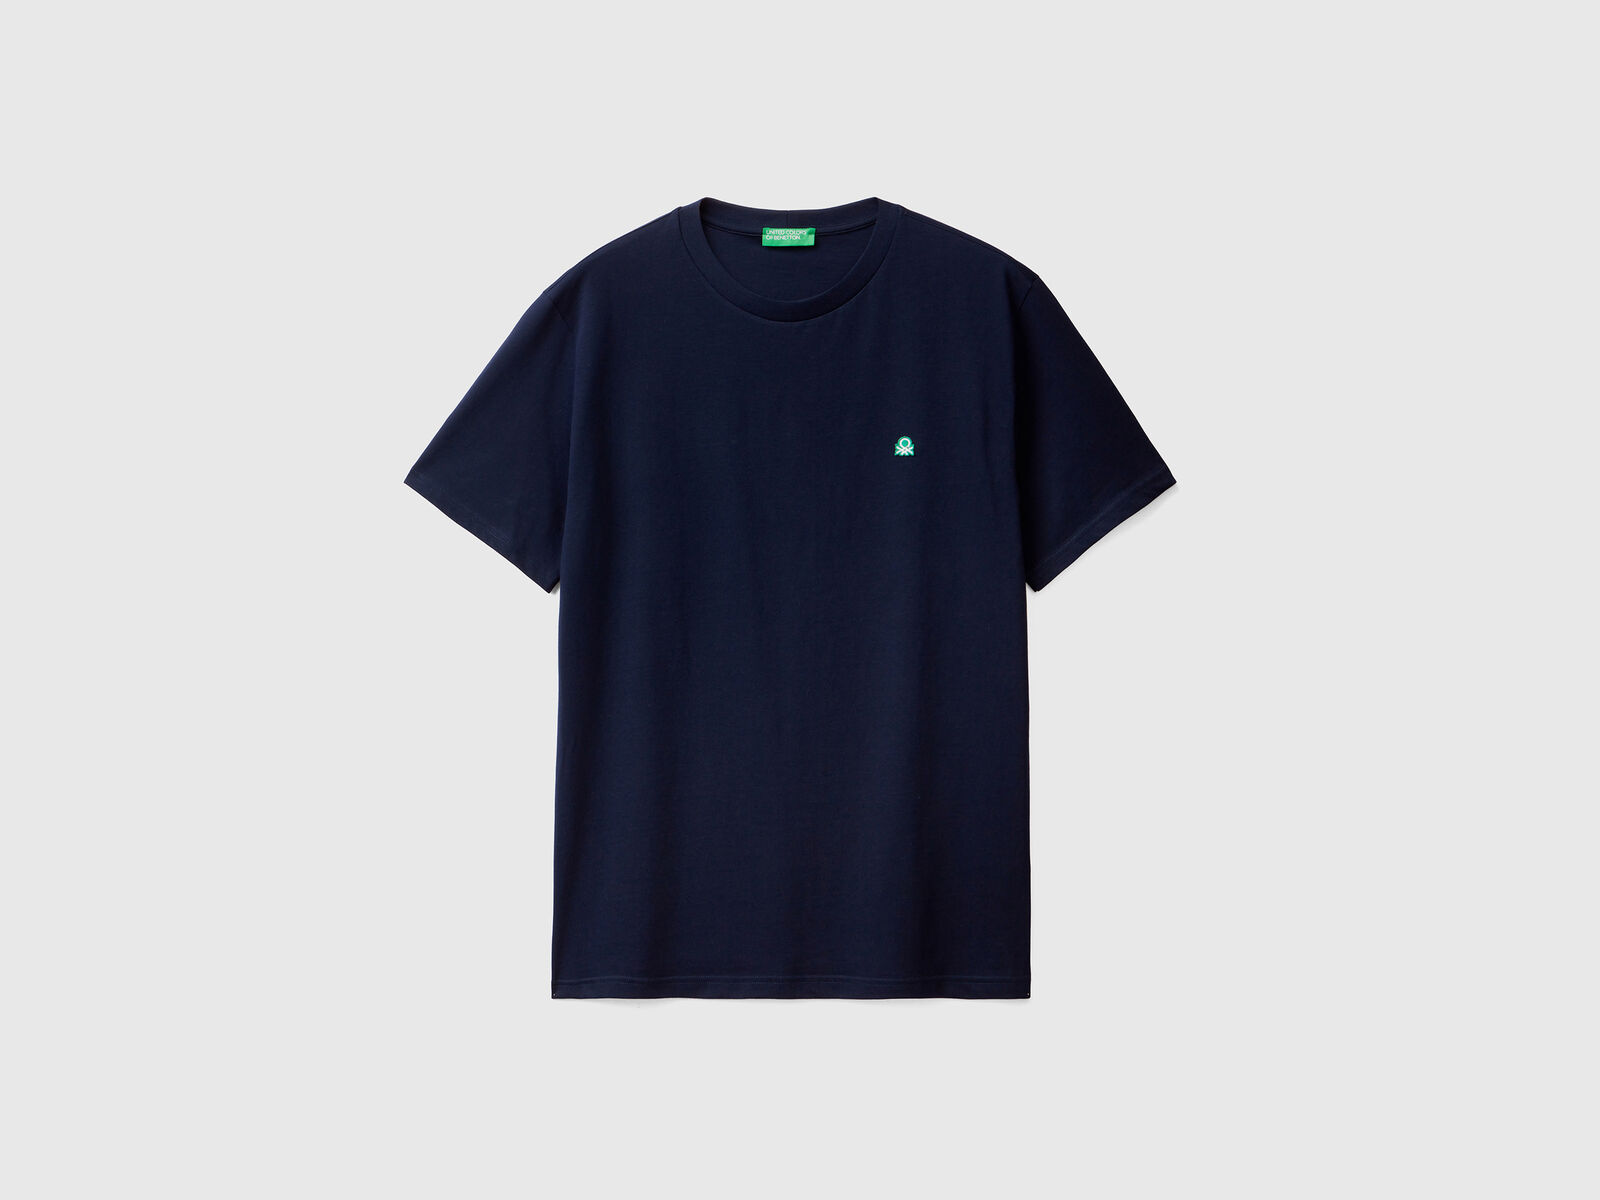 Benetton 100% Dark basic | - organic t-shirt Blue cotton